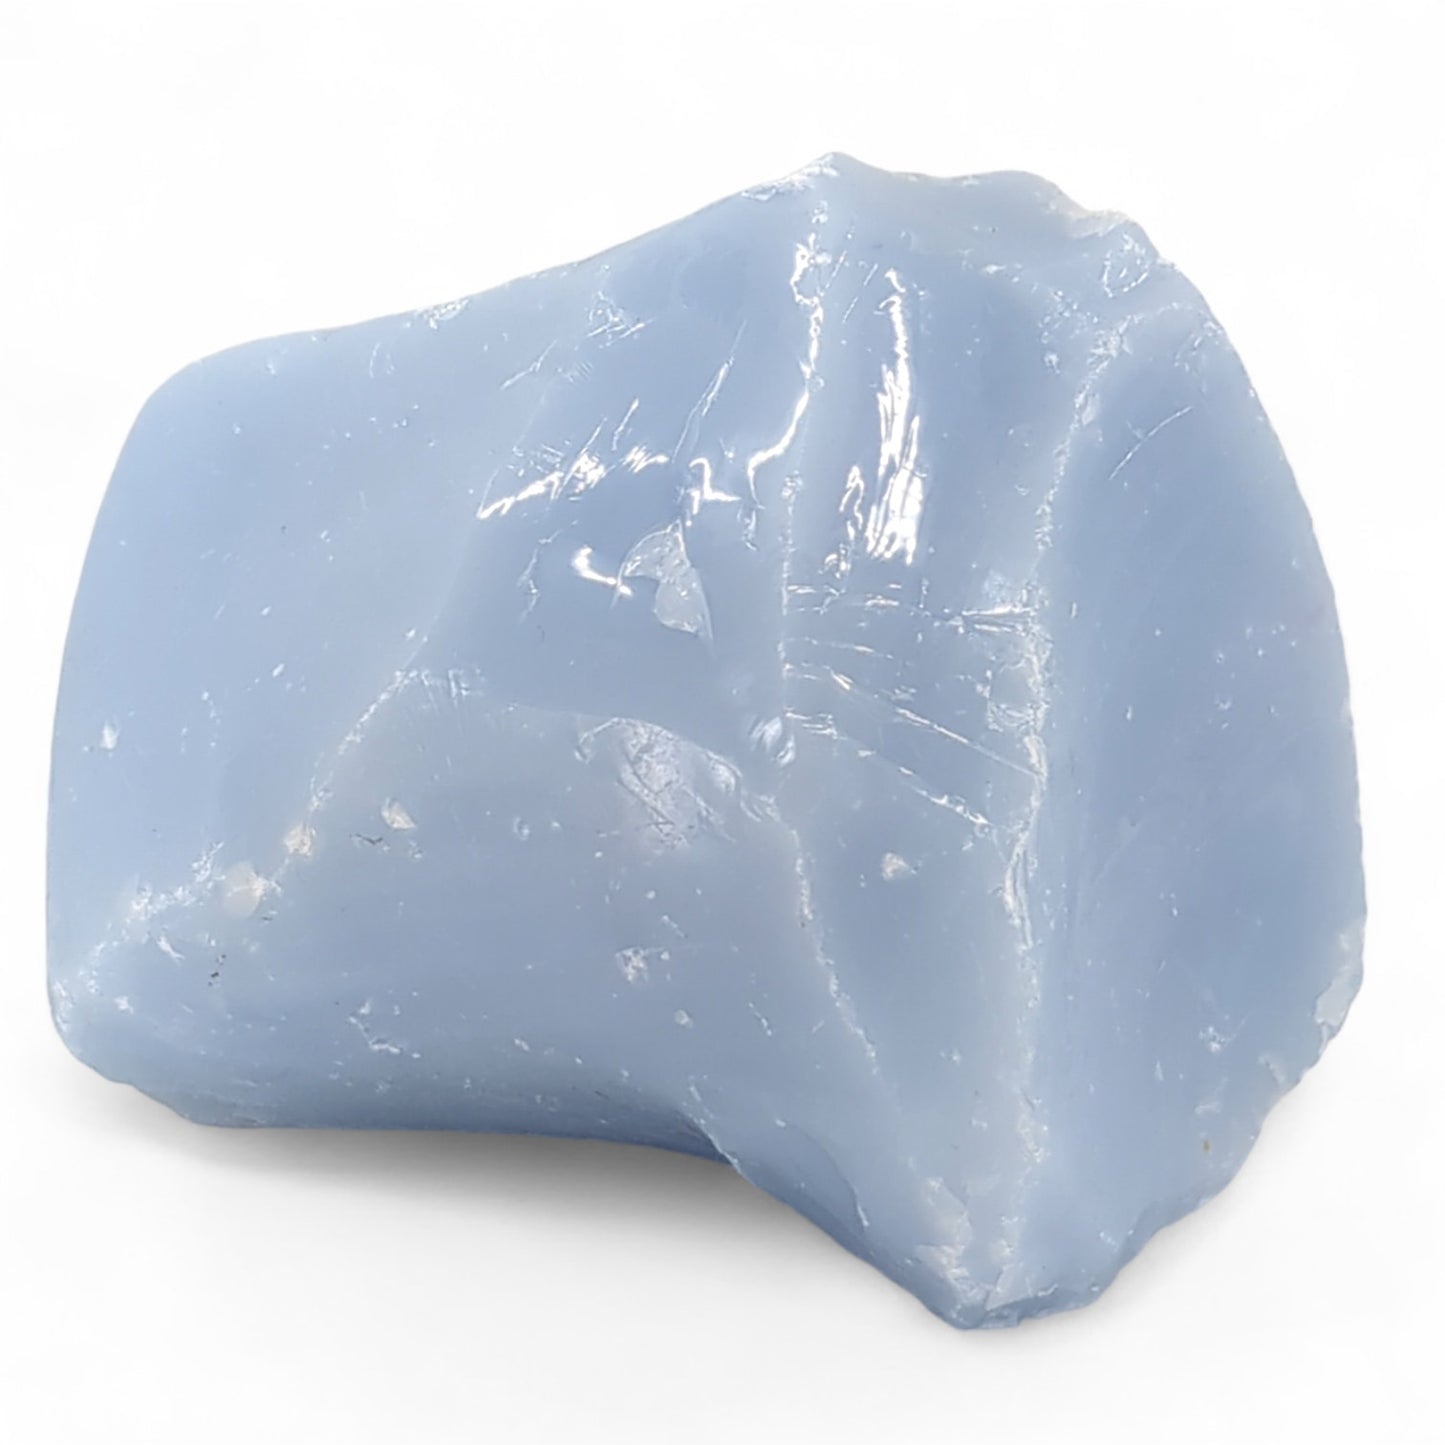 Satin Blue Art Glass Cullet Manganese Glowing Slag Glass #4GX115